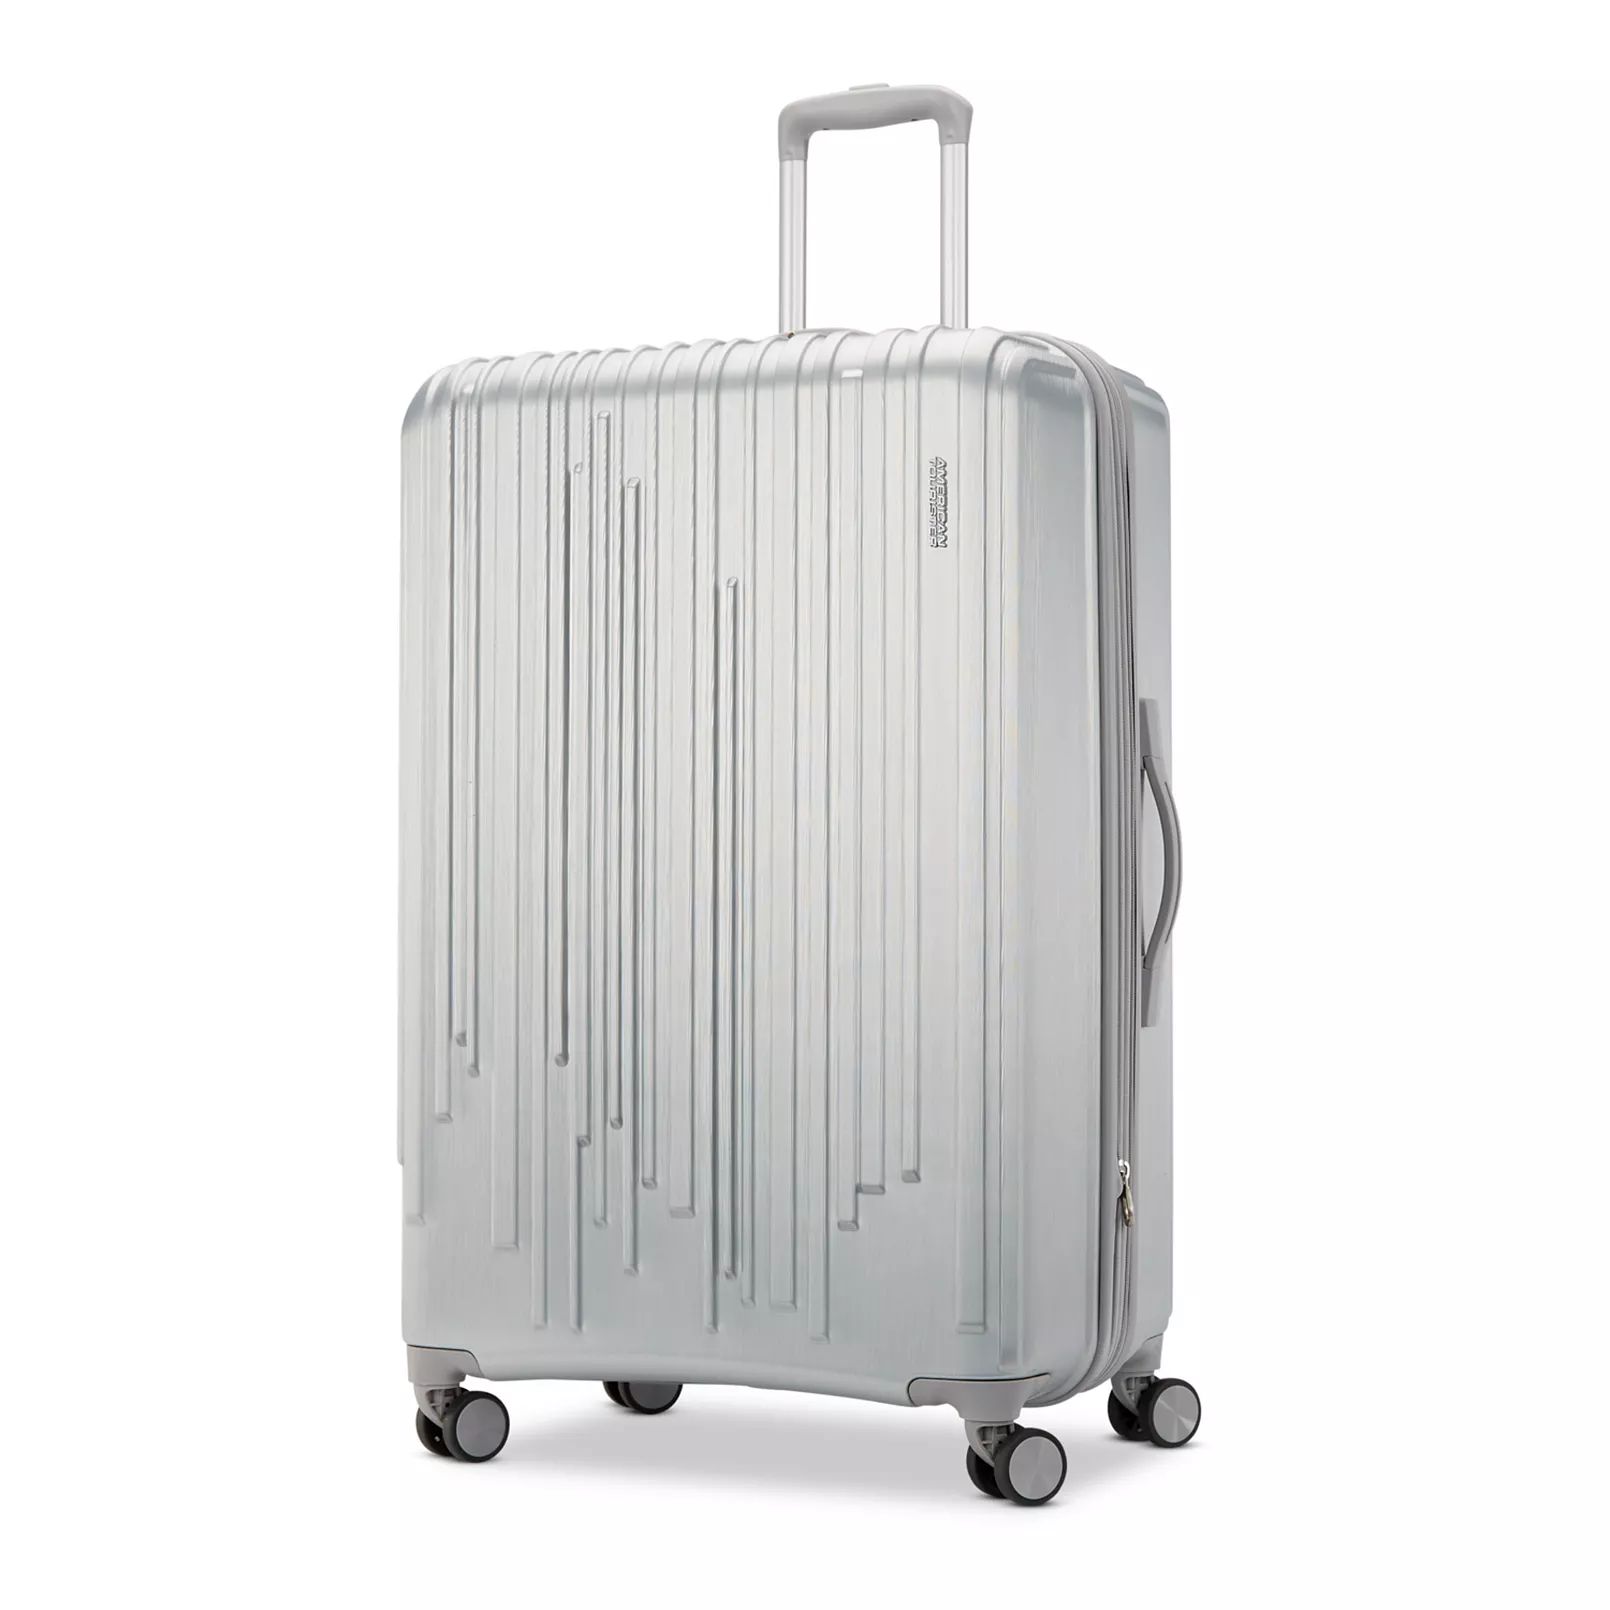 American Tourister Burst Max Quatro Hardside Spinner Luggage | Kohl's